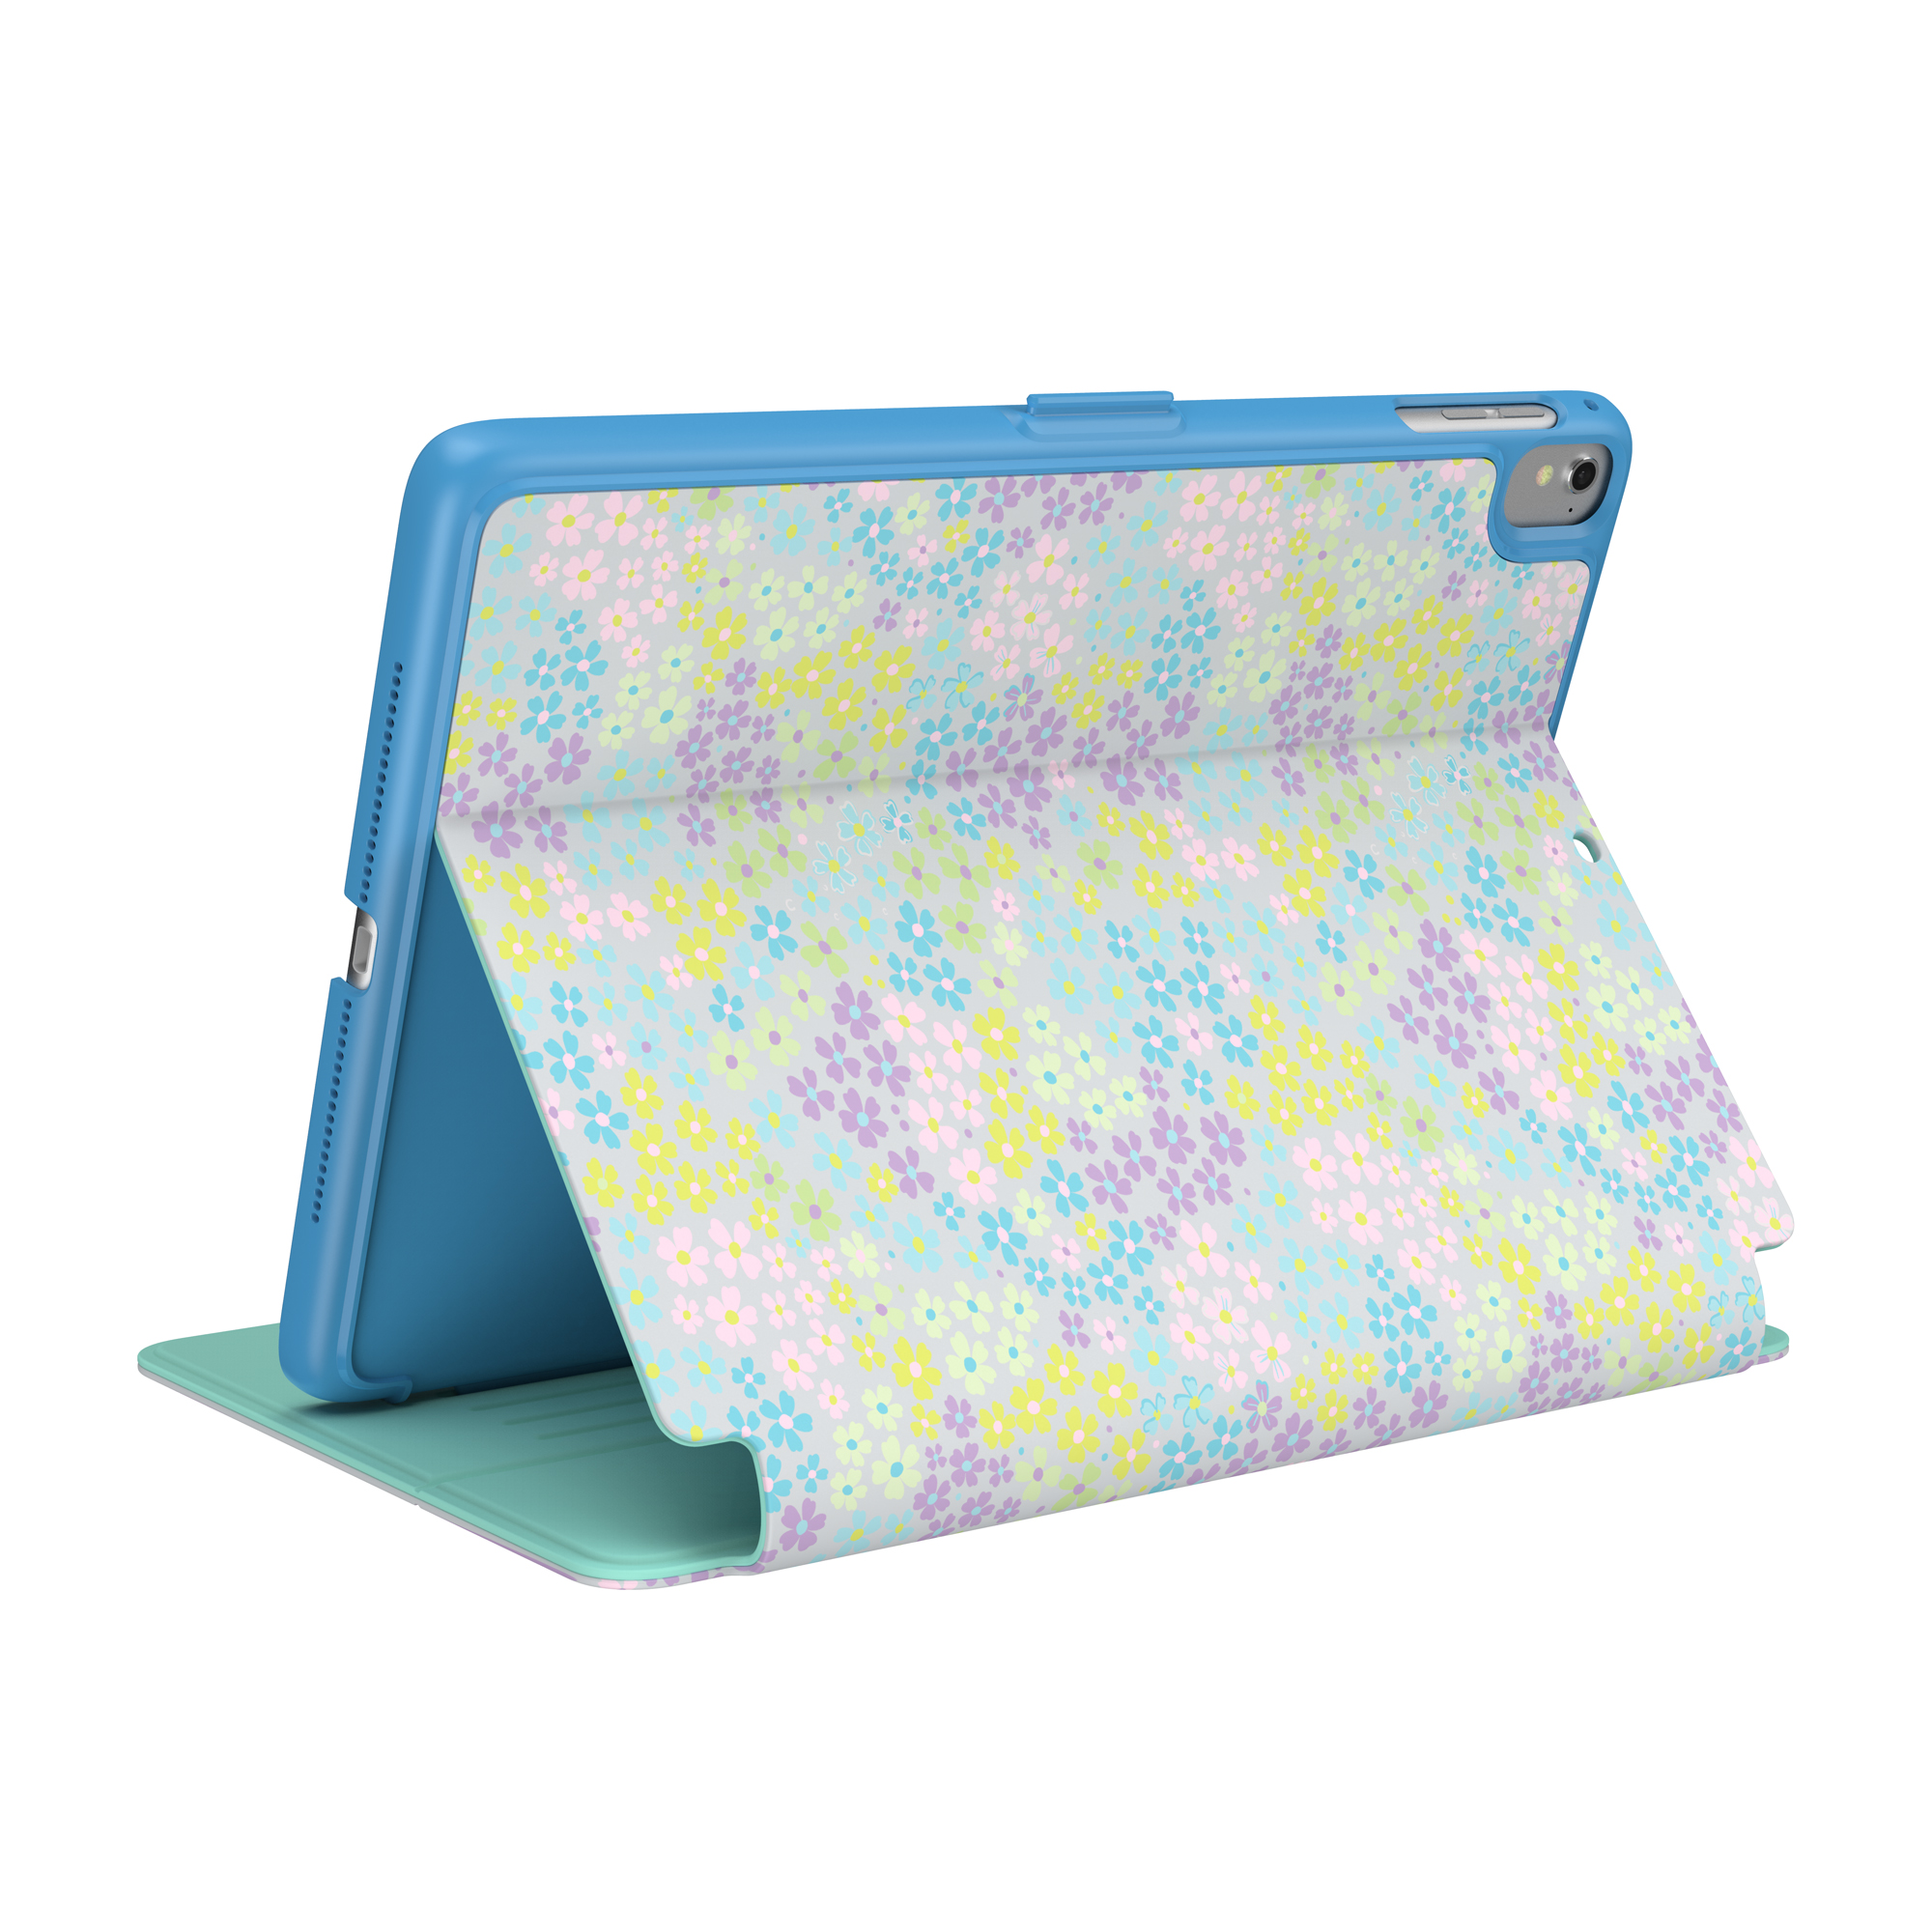 Speck 9.7 " iPad Air 2 Folio Case, Flower Print Aster Purple & Blue - image 5 of 7